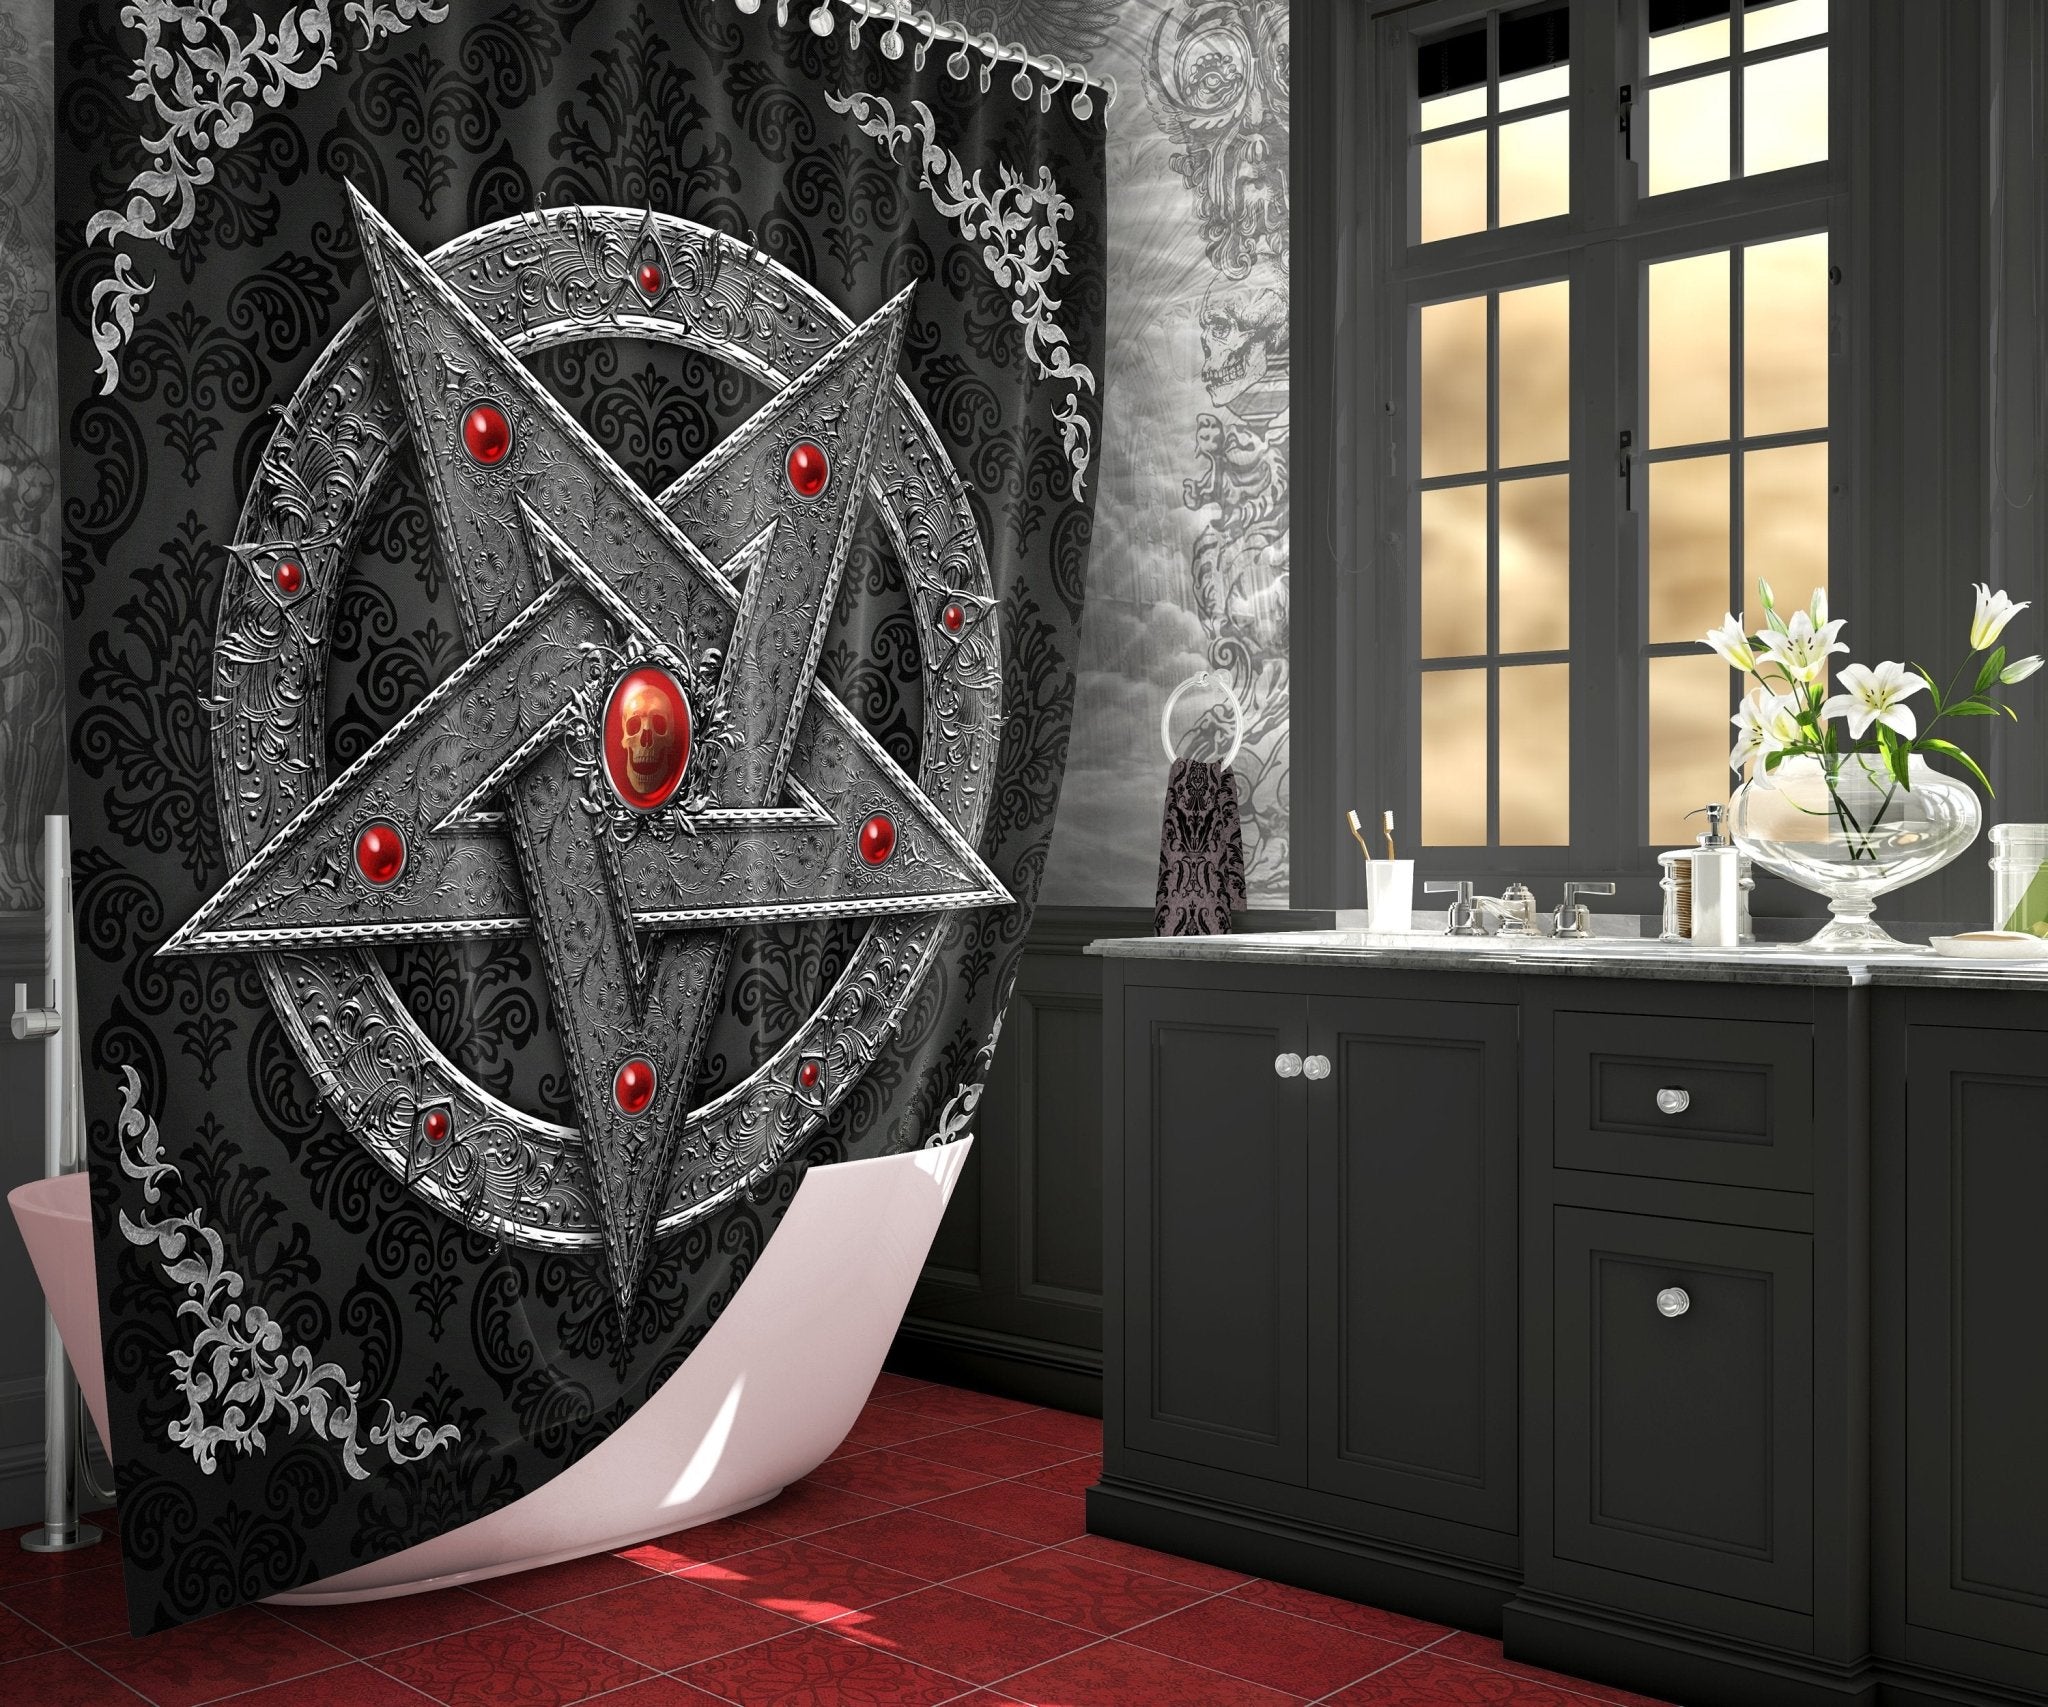 Pentagram Shower Curtain, Gothic Bathroom Decor, Satanic, Occult Decor - Silver - Abysm Internal